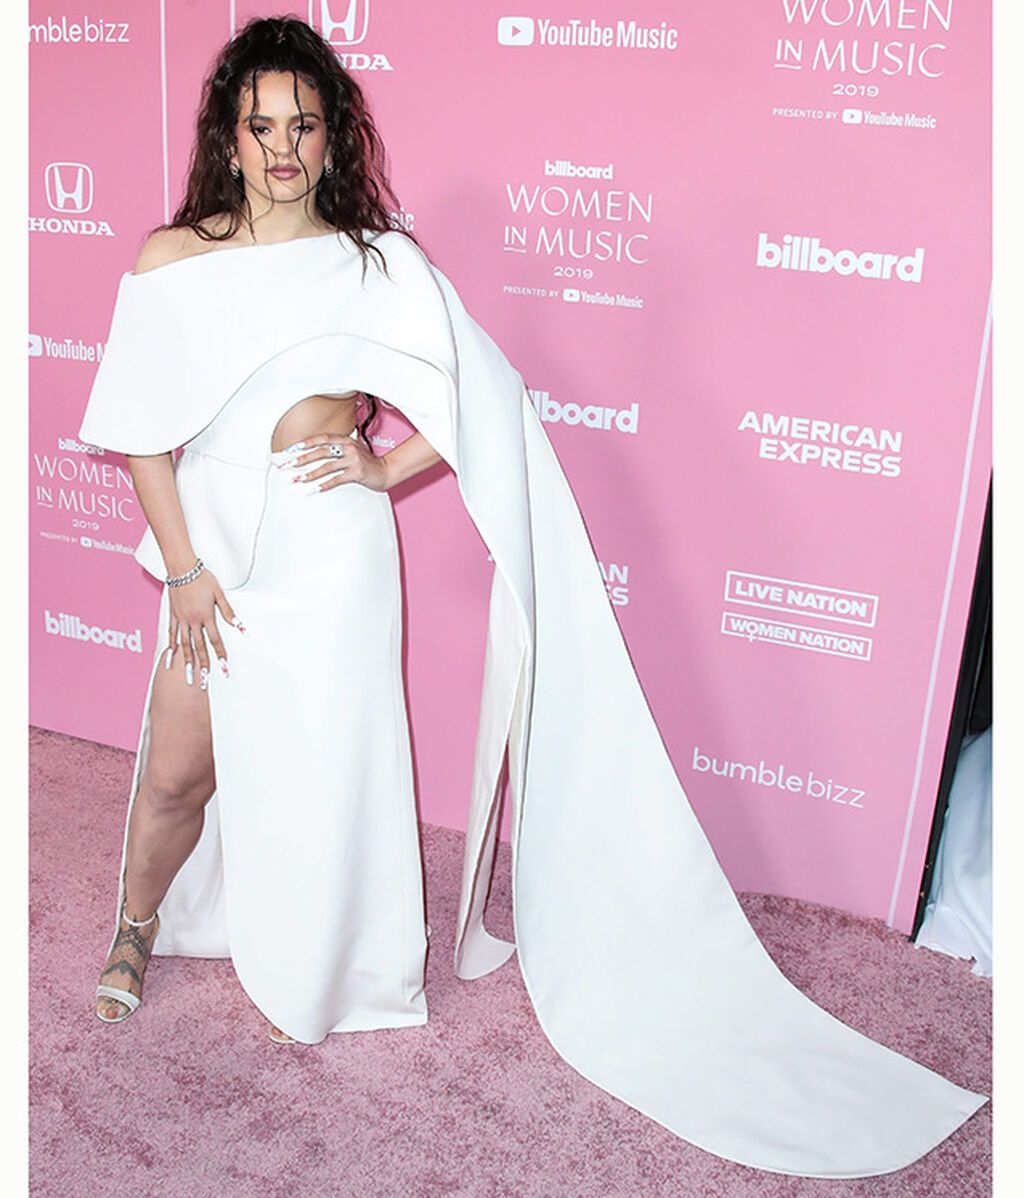 2019. Billboard Woman in Music